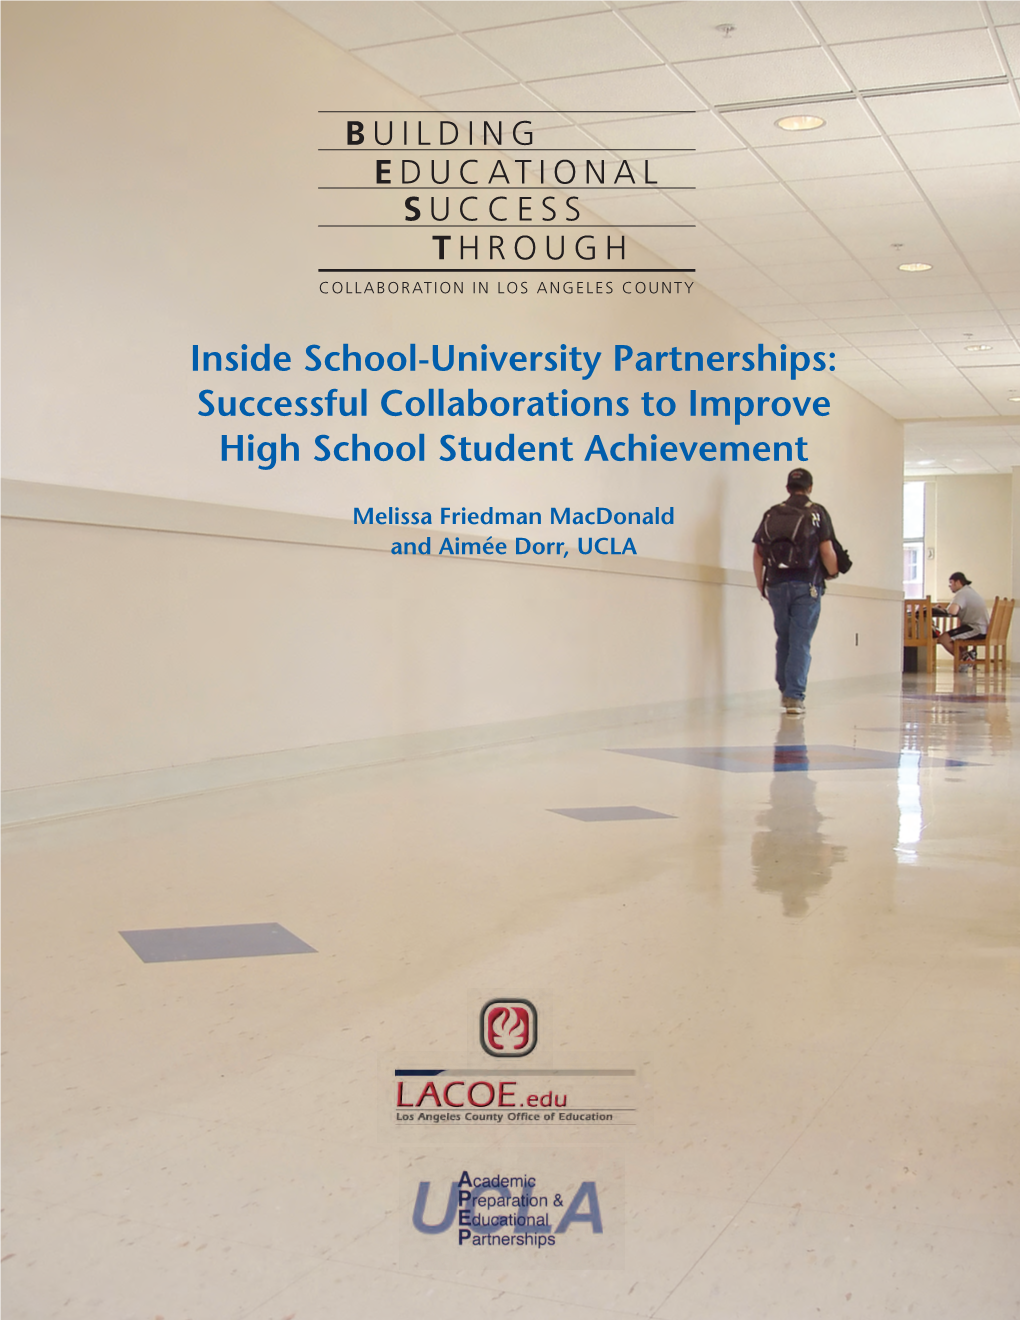 Inside School-University Partnerships: Successful Collaborations to Improve High School Student Achievement